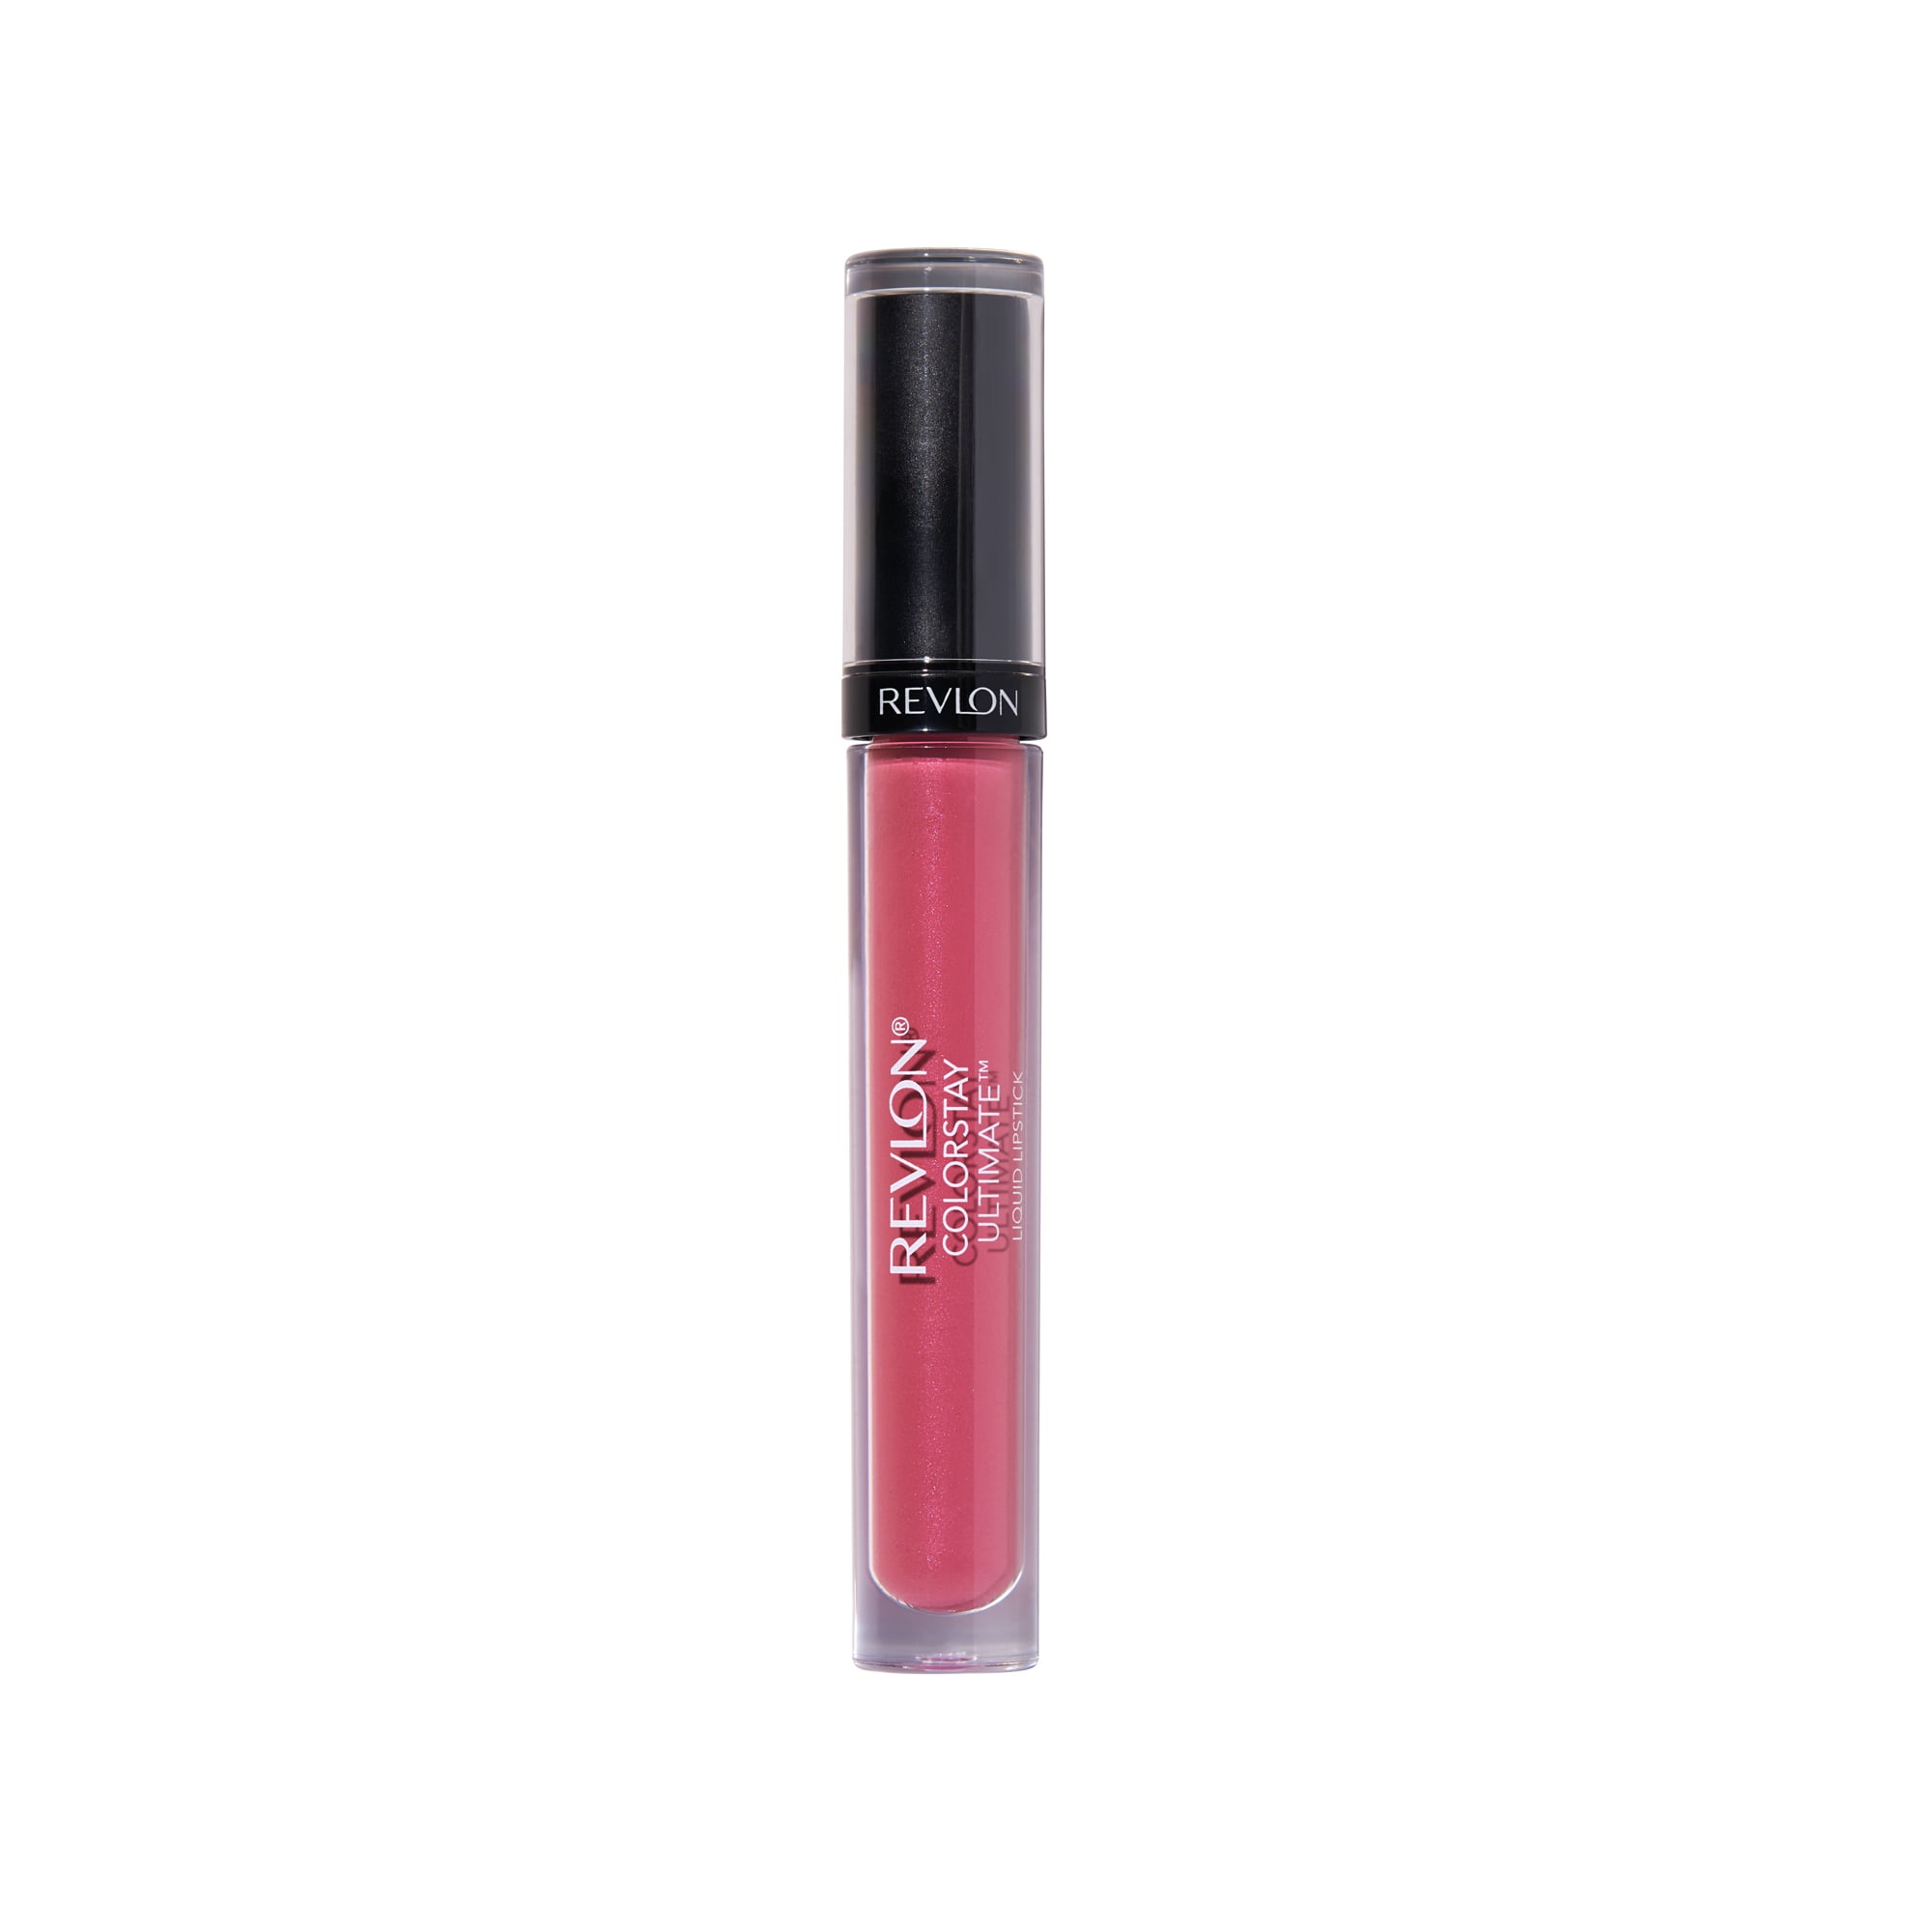 Revlon ColorStay Ultimate Liquid Lipstick, 010 Premium Pink, 0.1 fl oz